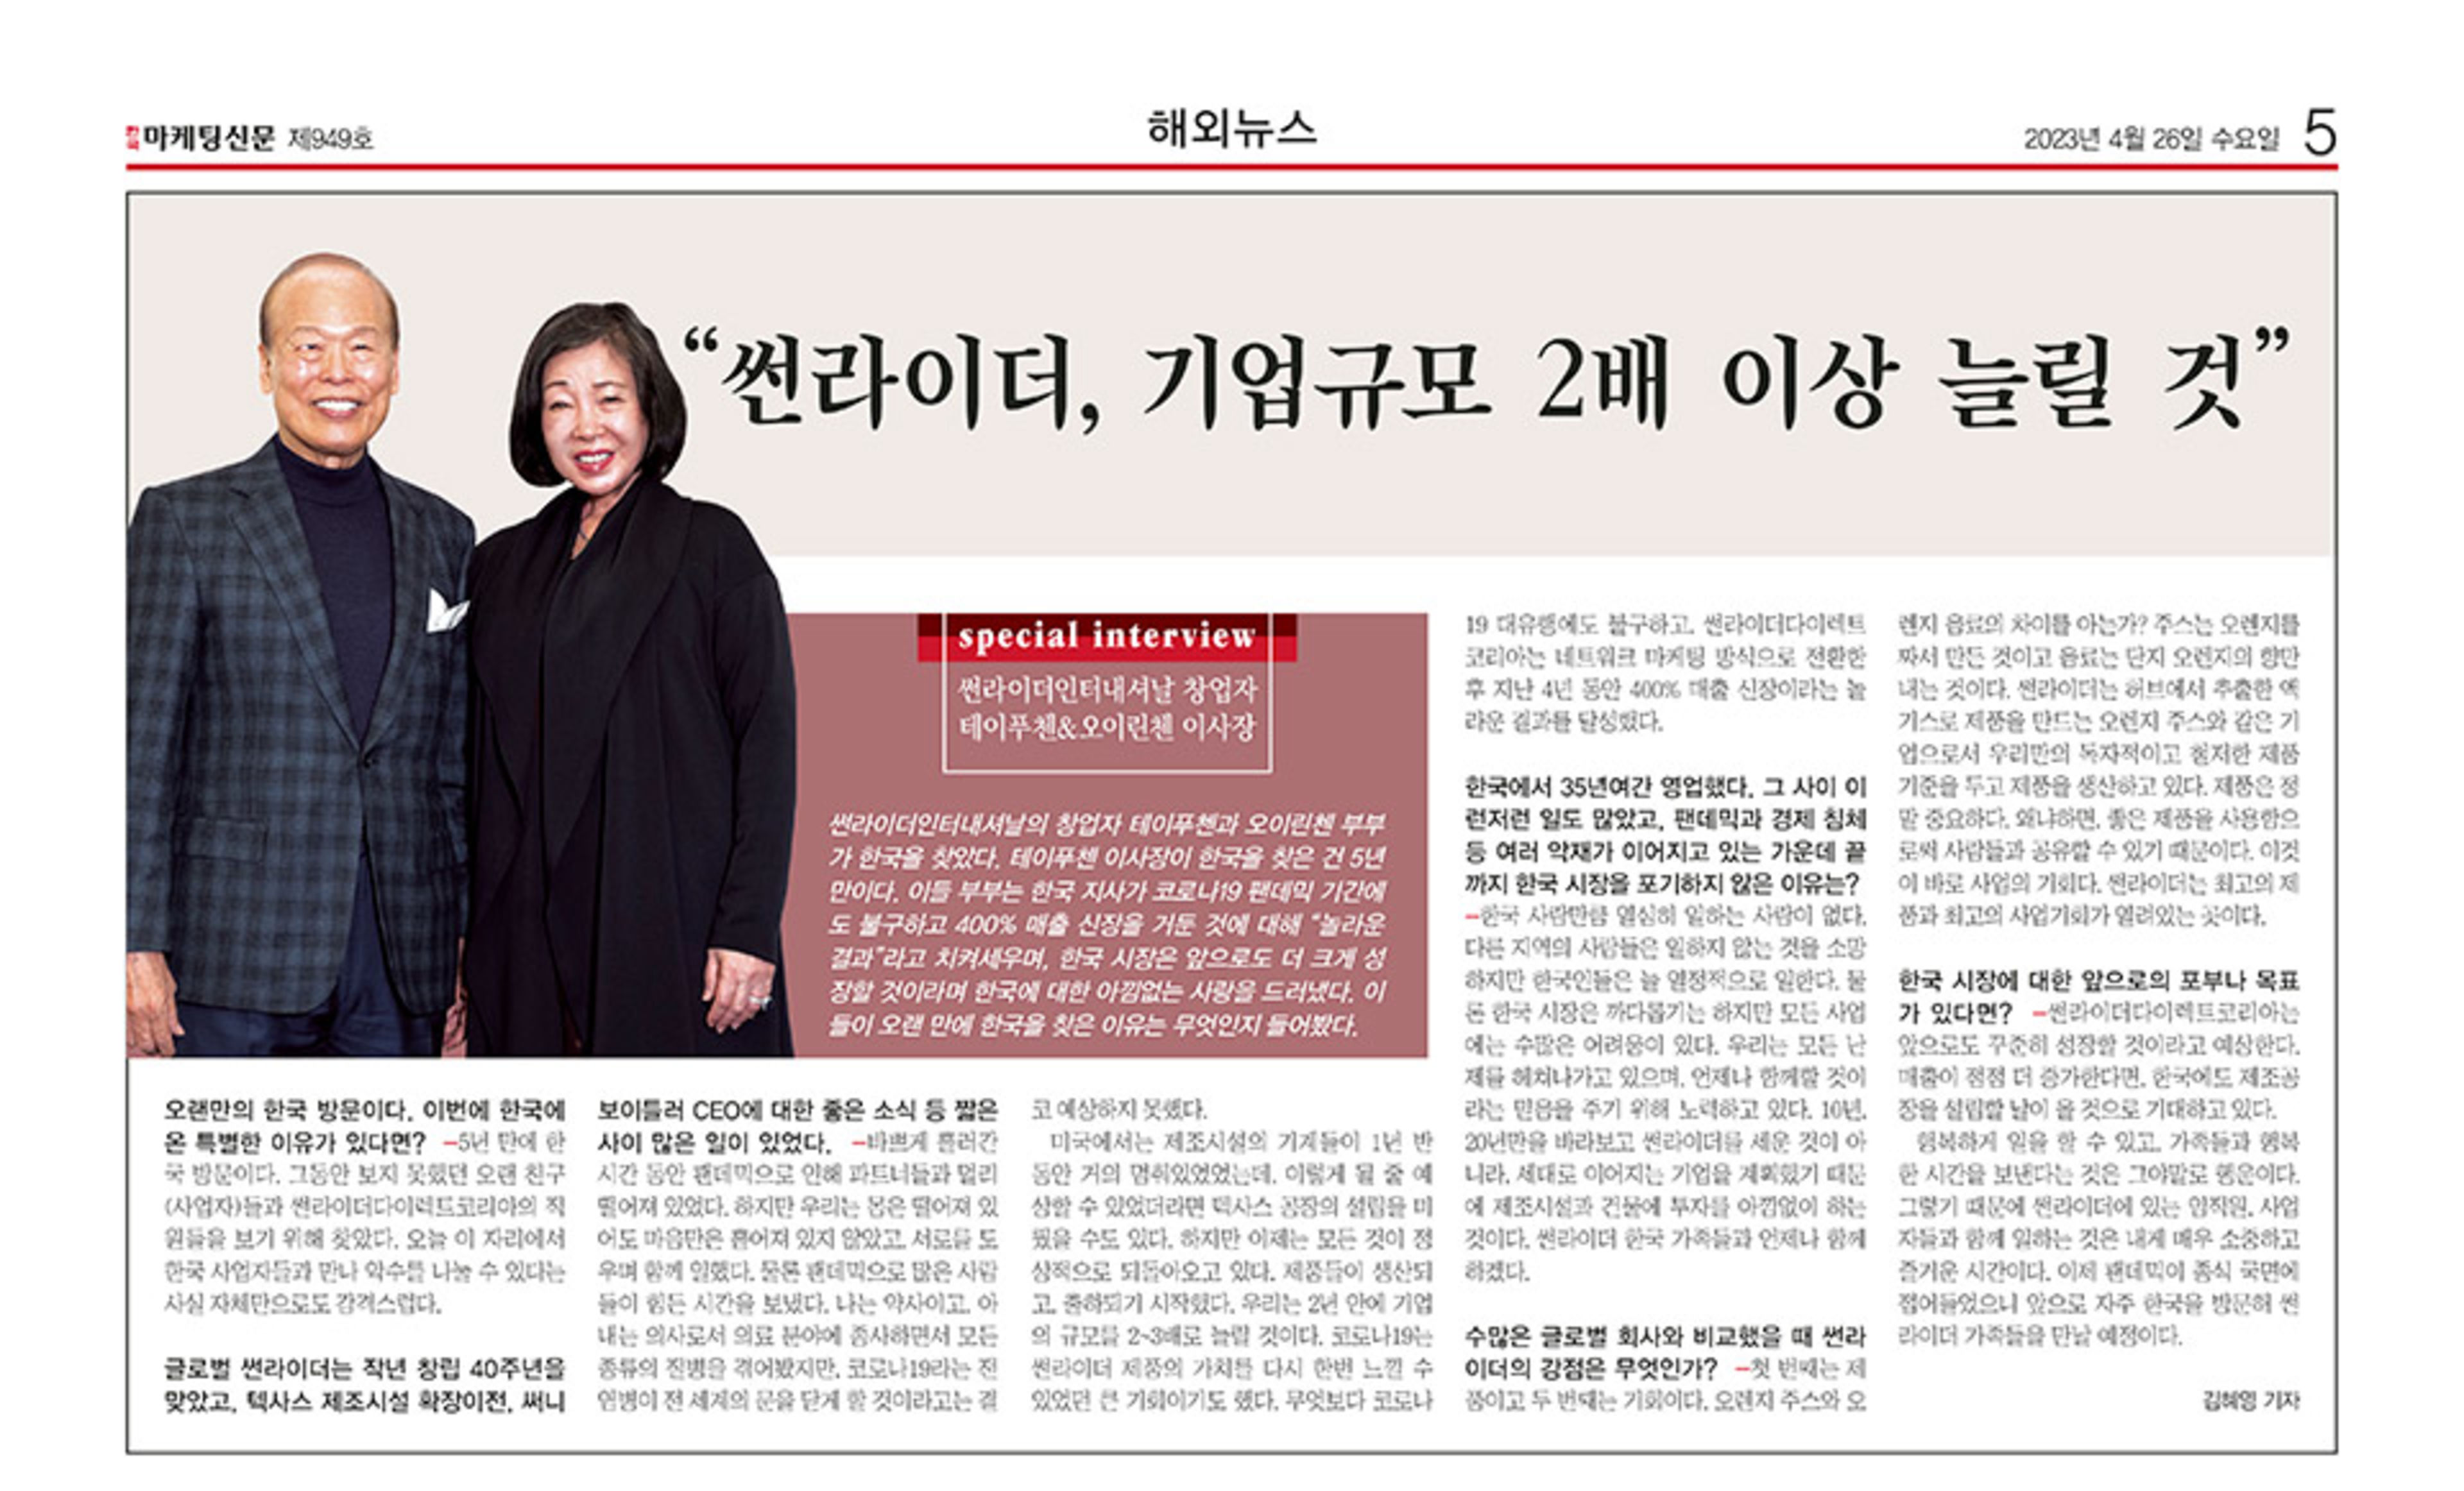 korea-marketing-newspaper-interviw-with-drs-chen-1.jpg